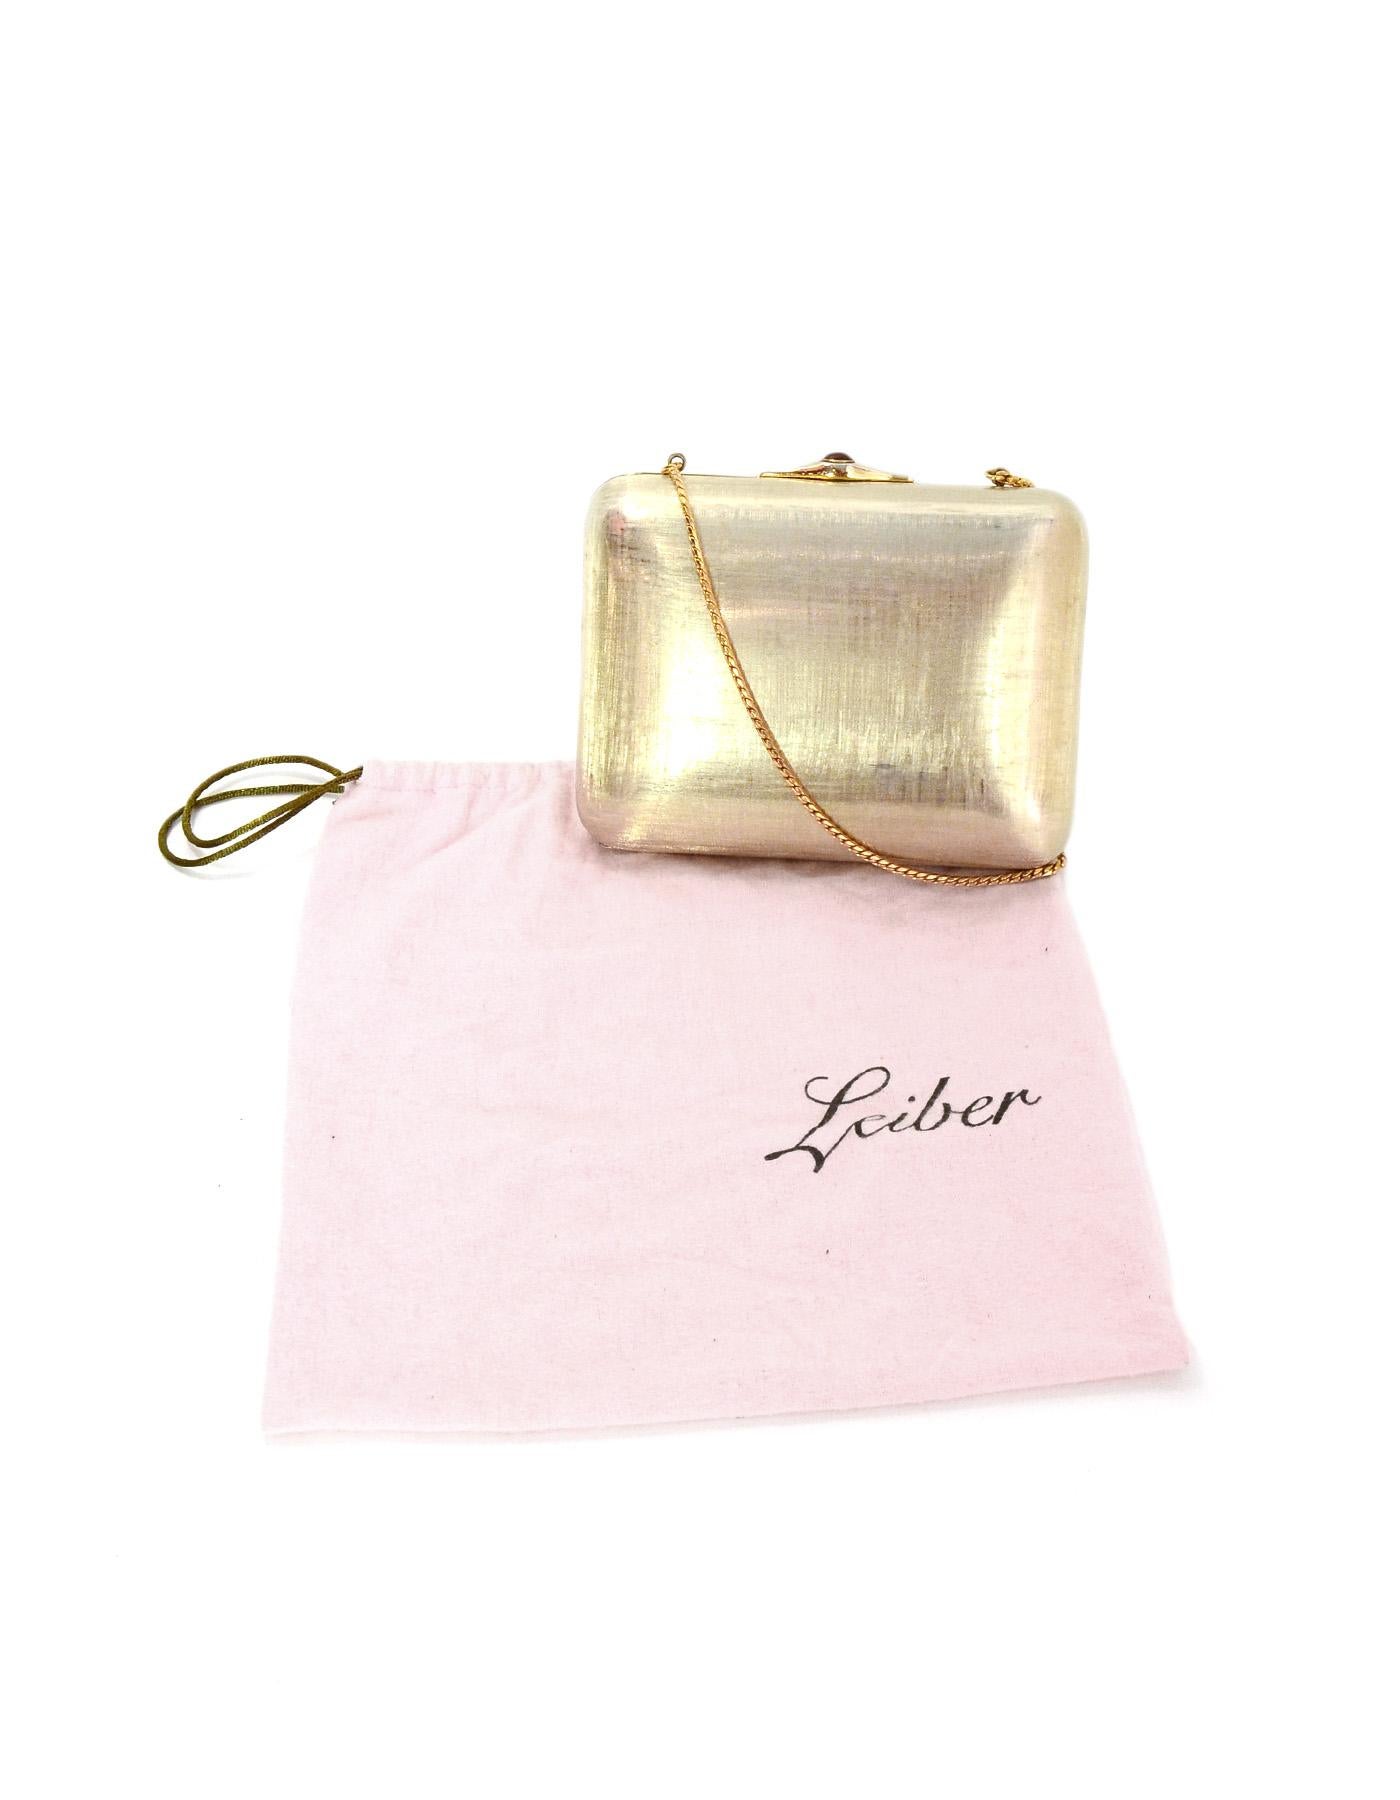 Judith Leiber Gold Minaudiere Clutch Bag w. Stone Closure & Chain Strap  5